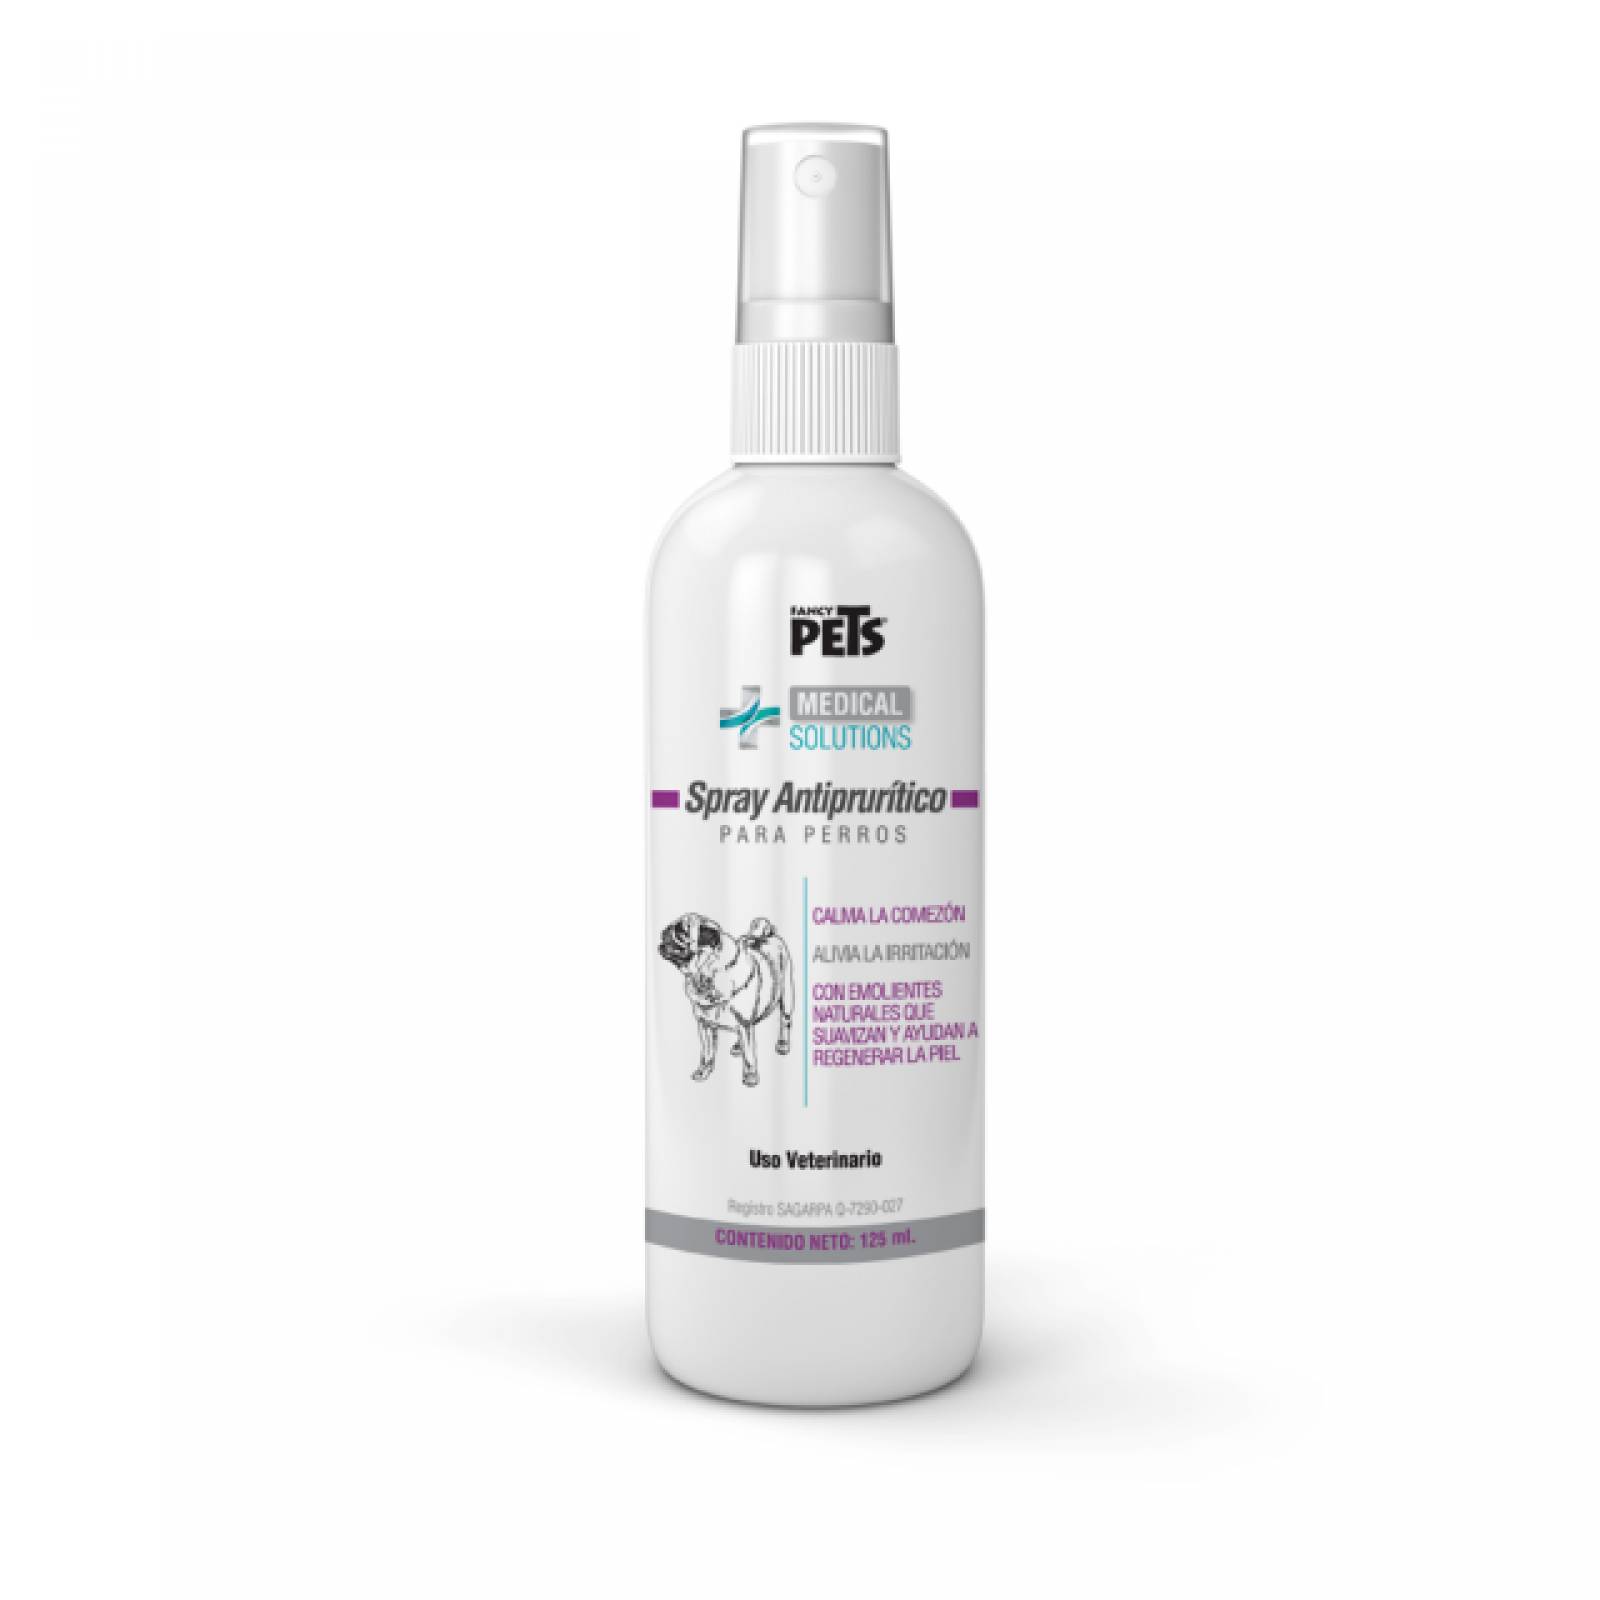 Fancy Pets Medical Solutions Spray Antipruritico 125 ml